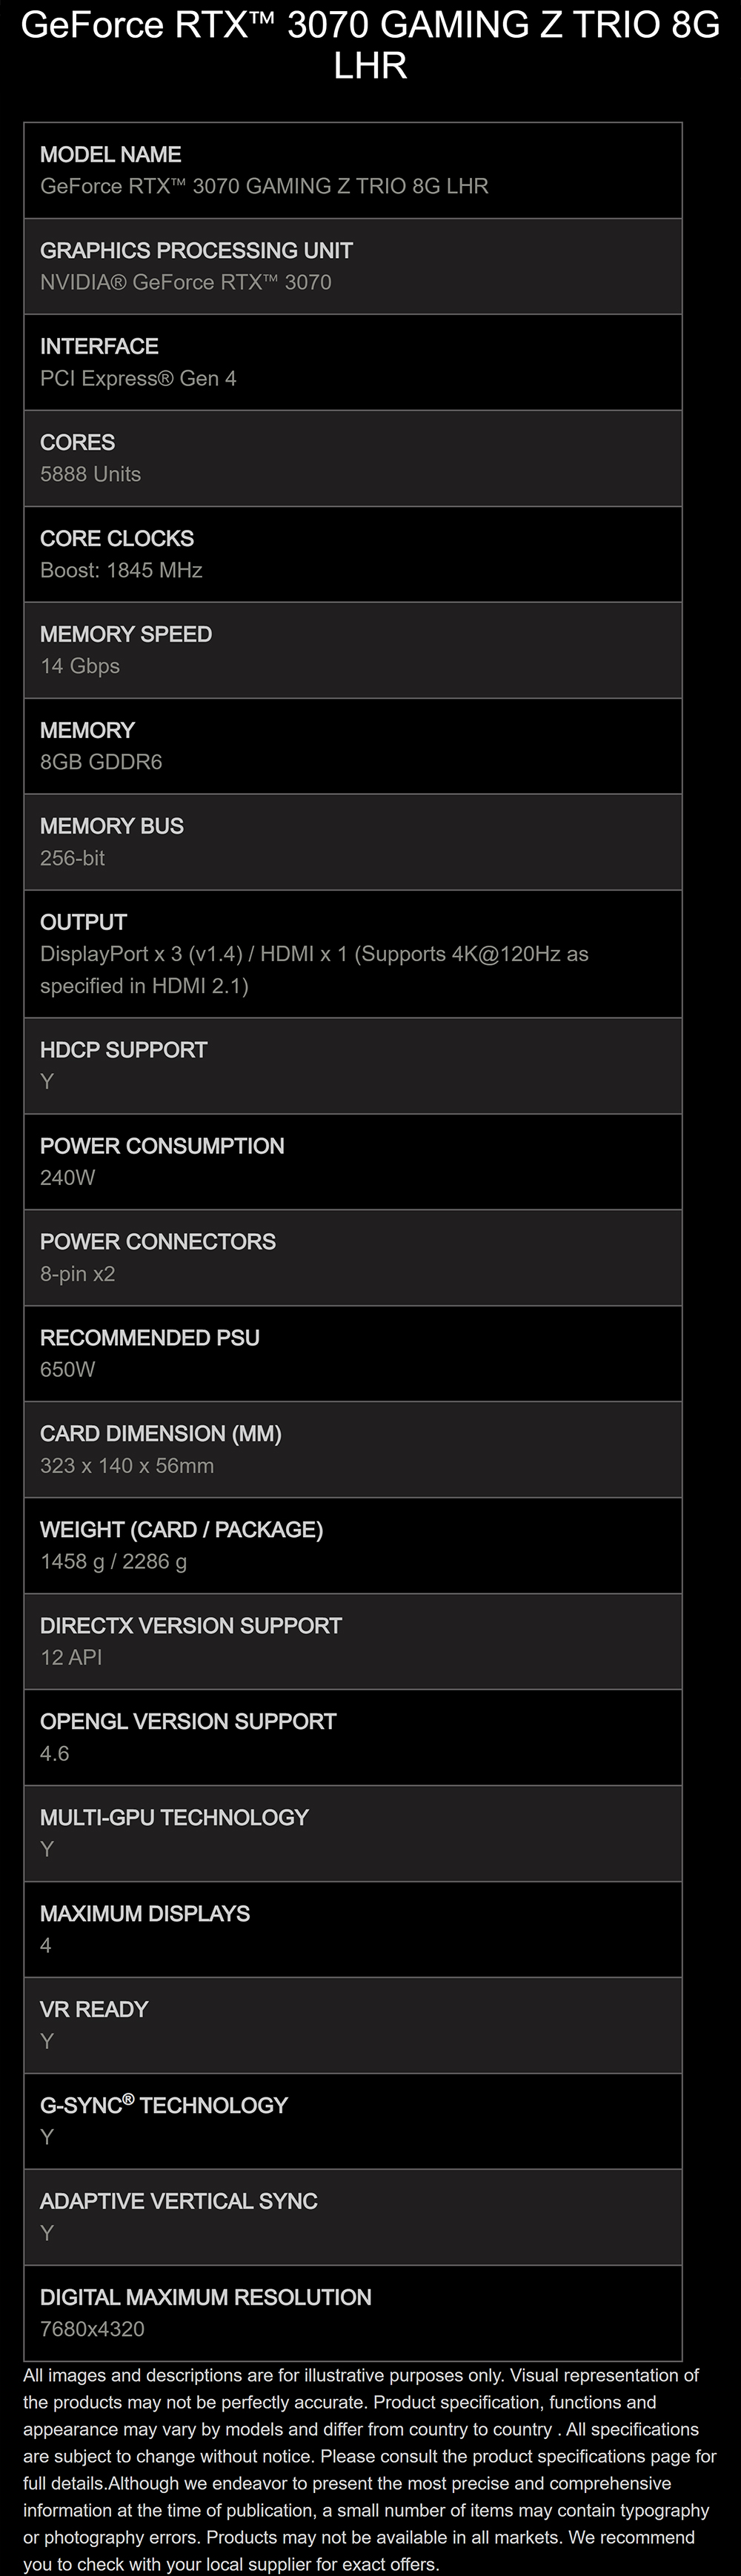 MSI GeForce RTX 3070 GAMING Z TRIO 8G LHR RTX3070 specs